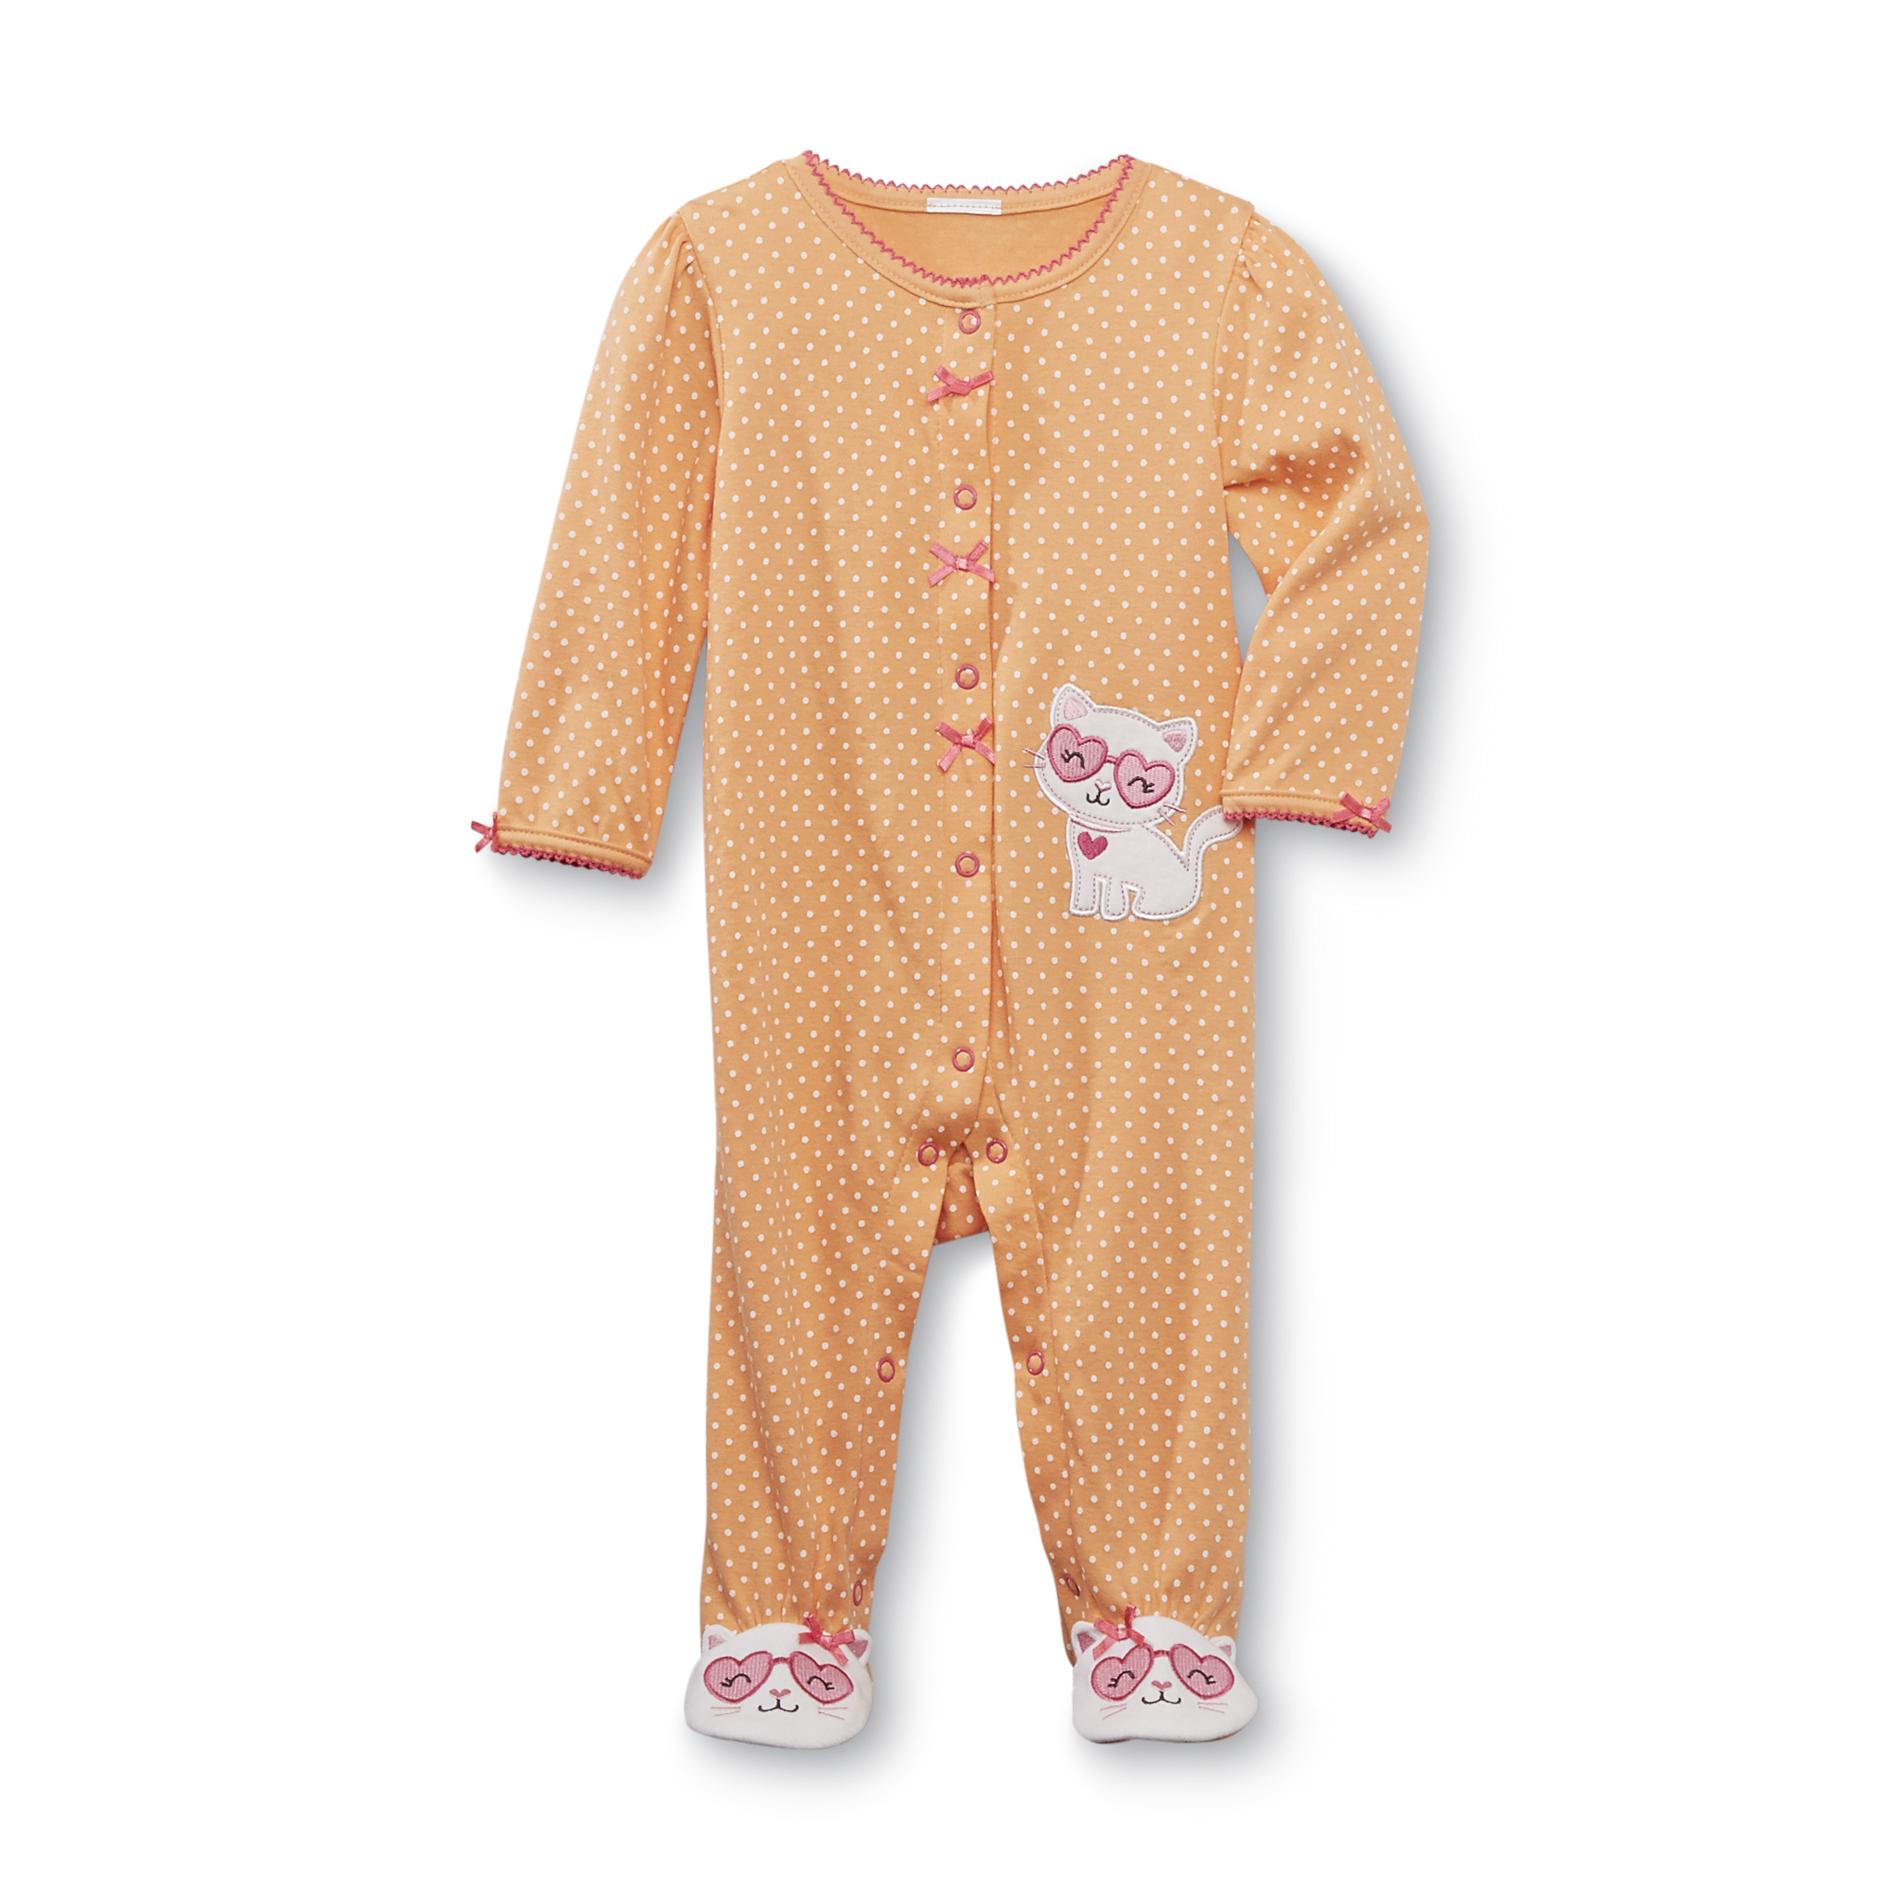 Small Wonders Newborn Girl's Sleeper Pajamas - Polka Dots & Cat